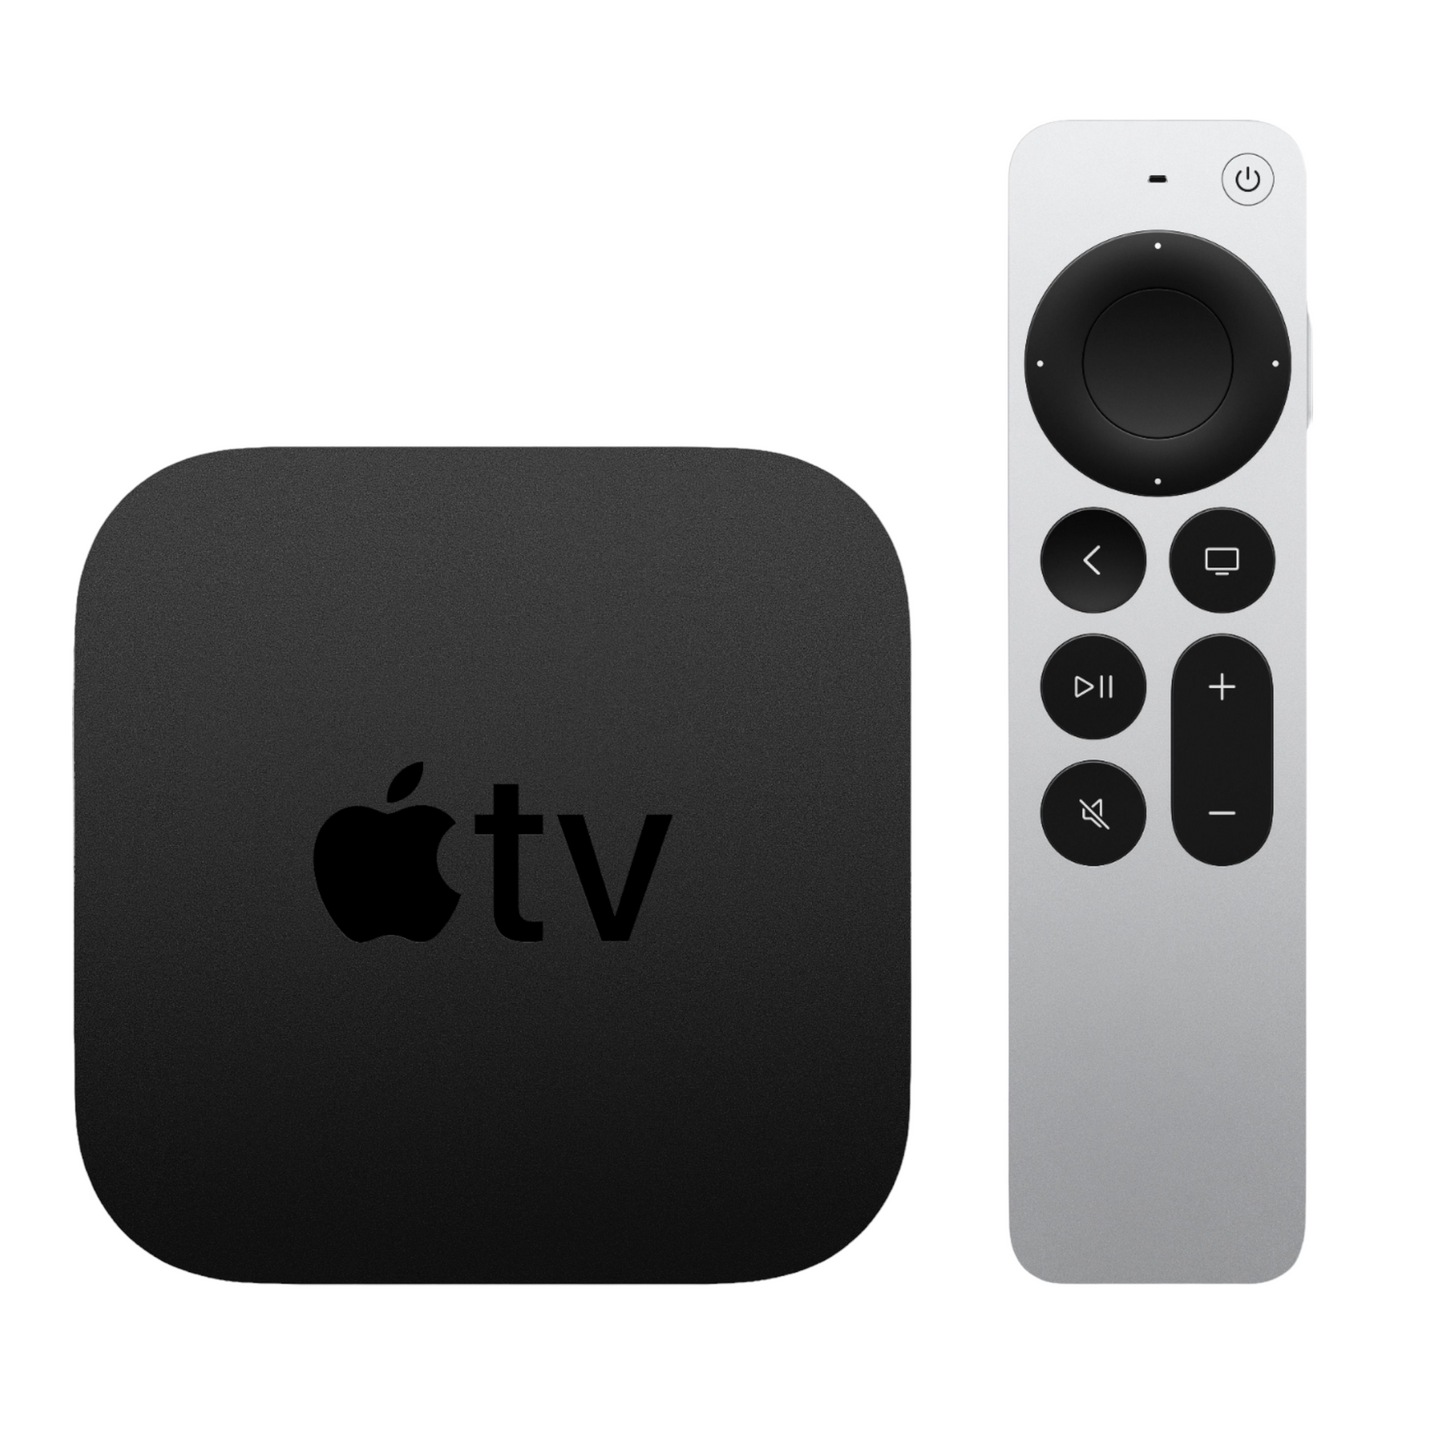 Apple TV 4K 32GB (2nd Generation) (Latest Model) - Black